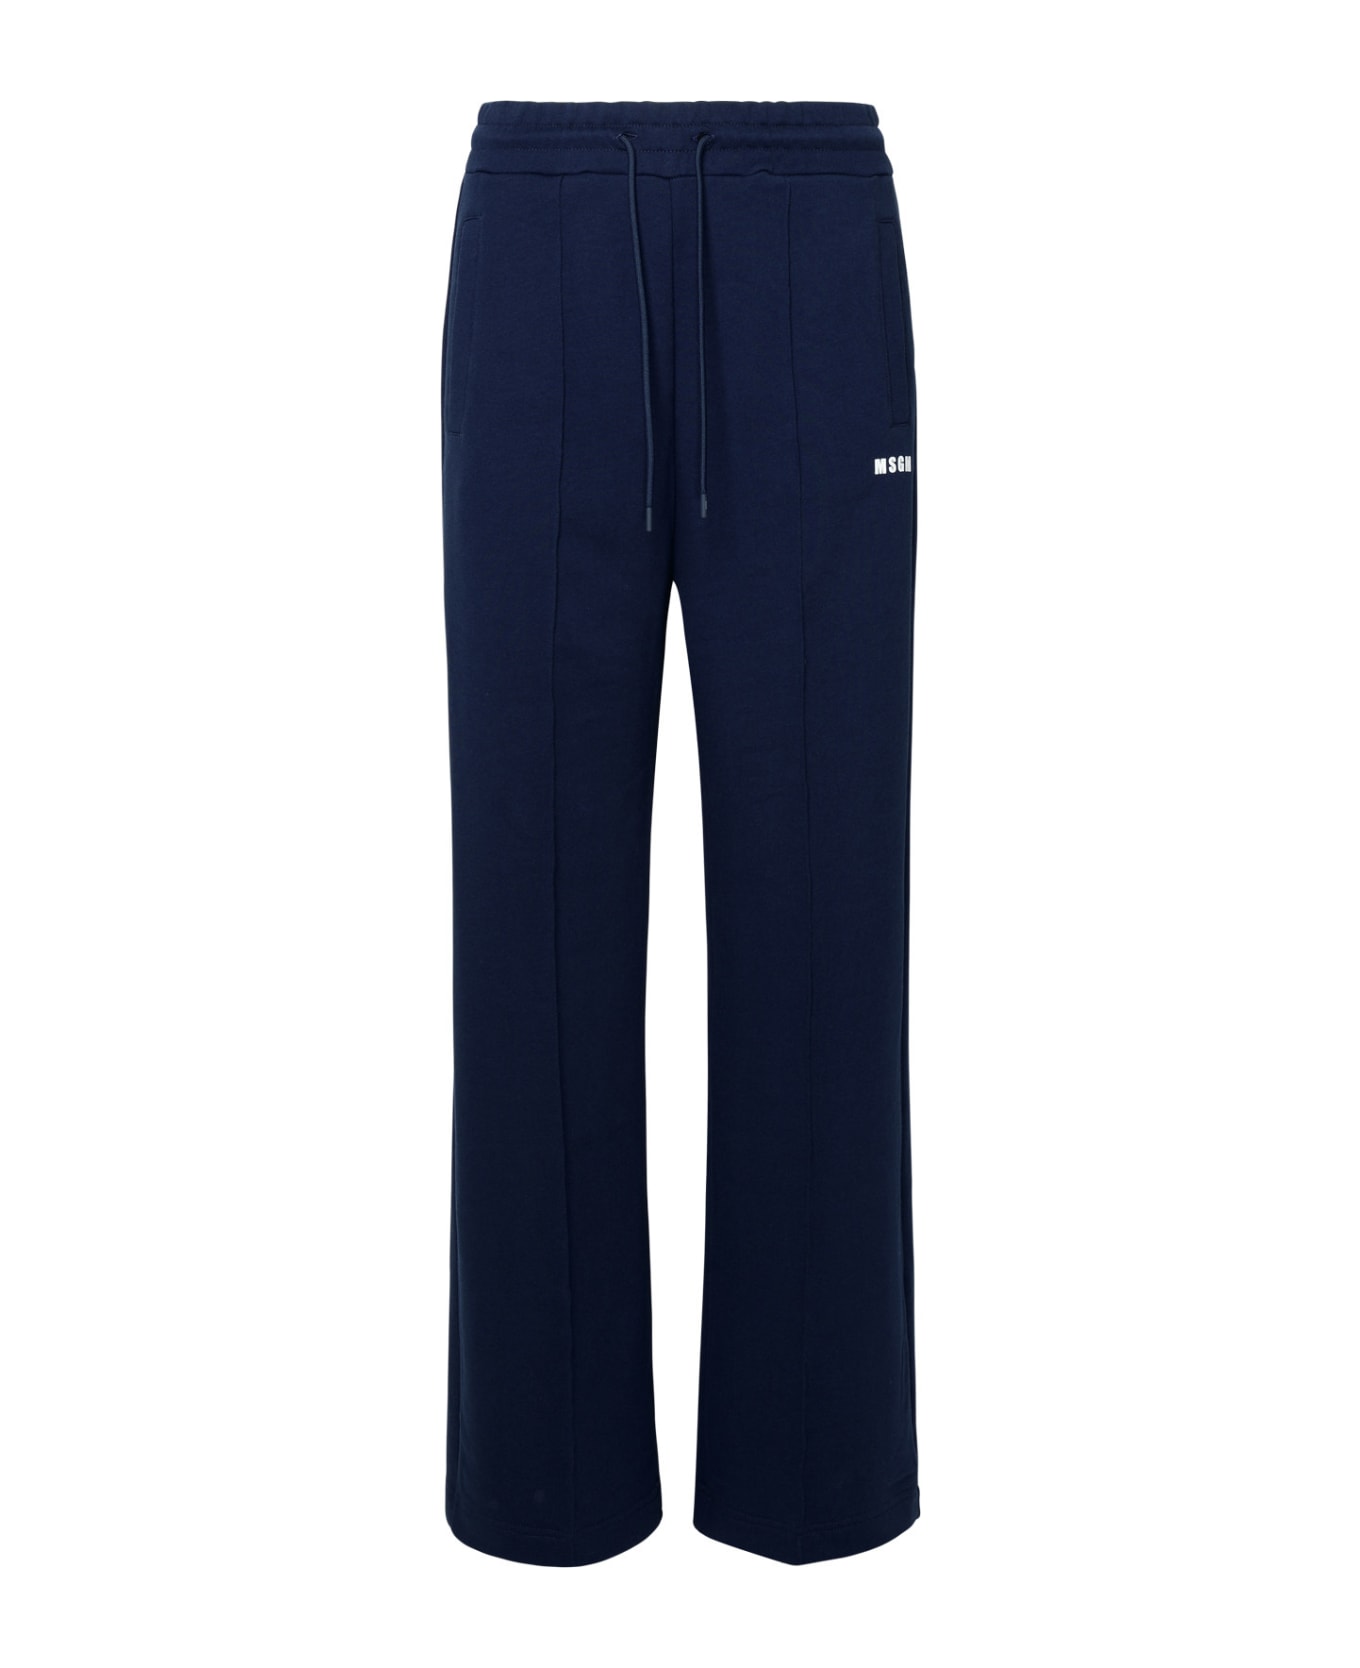 MSGM Blue Cotton Pants - Navy